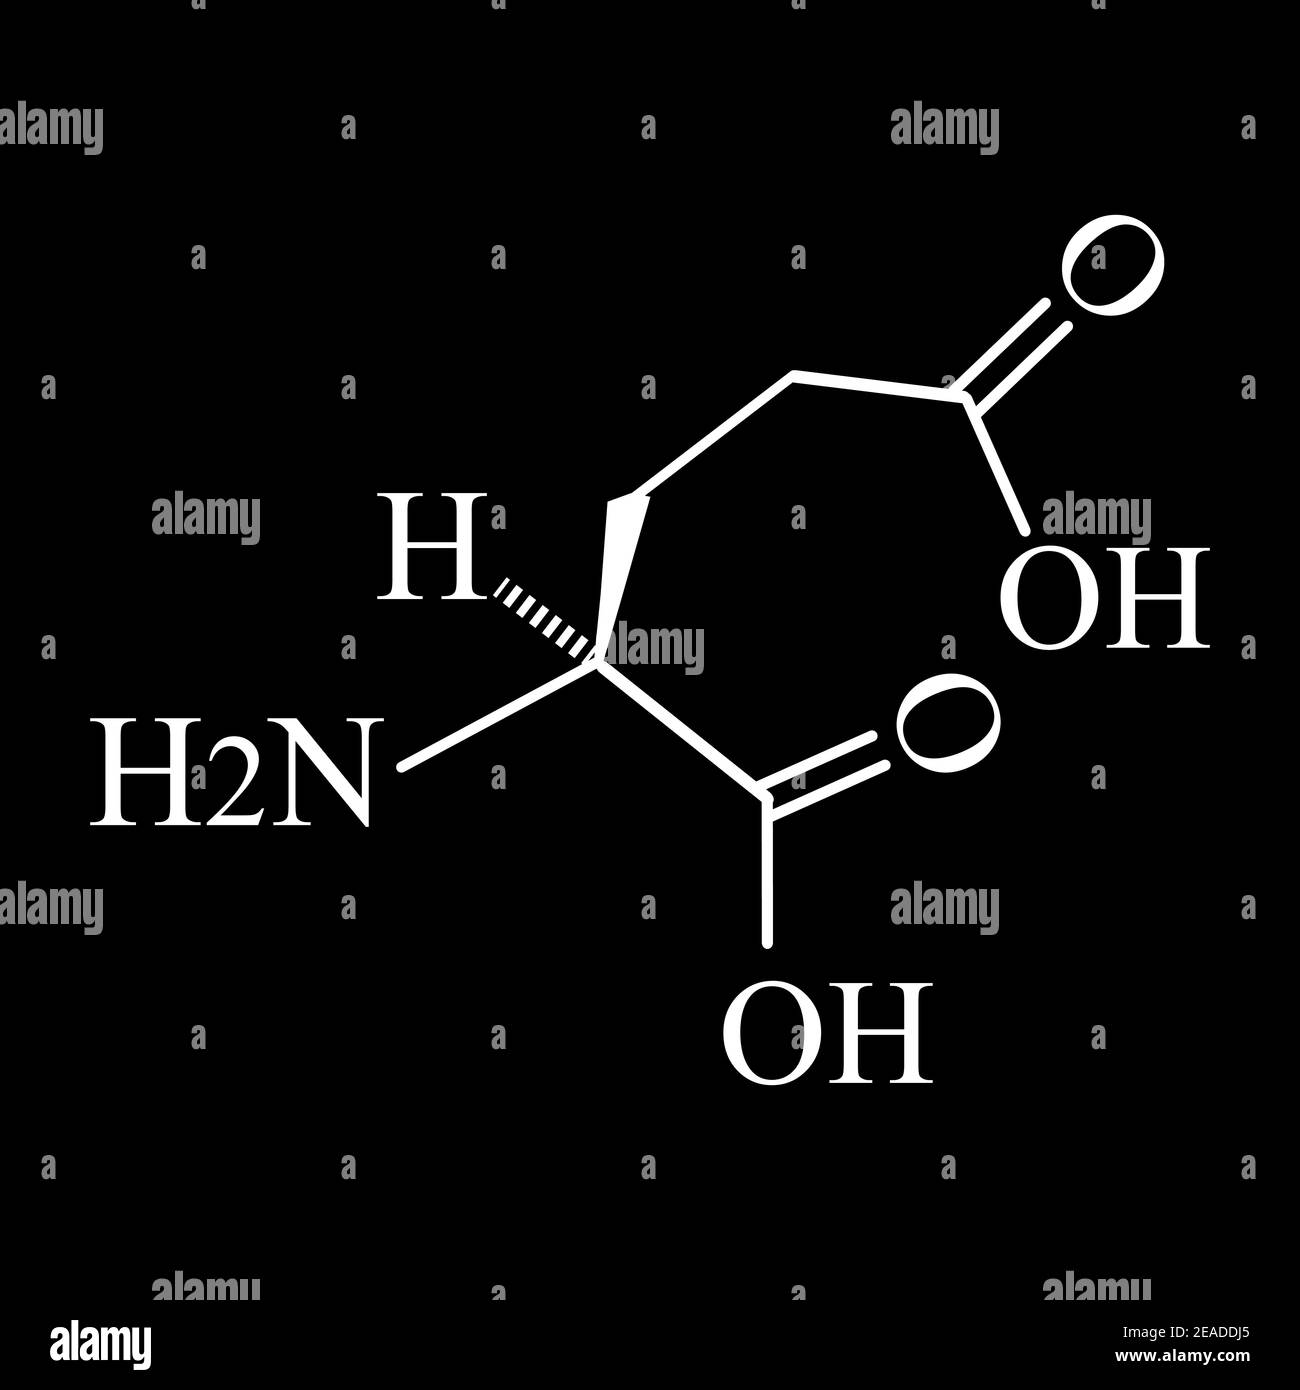 Glutamic acid is an amino acid. Chemical molecular formula glutamic acid amino acid. Vector illustration on isolated background Stock Vector